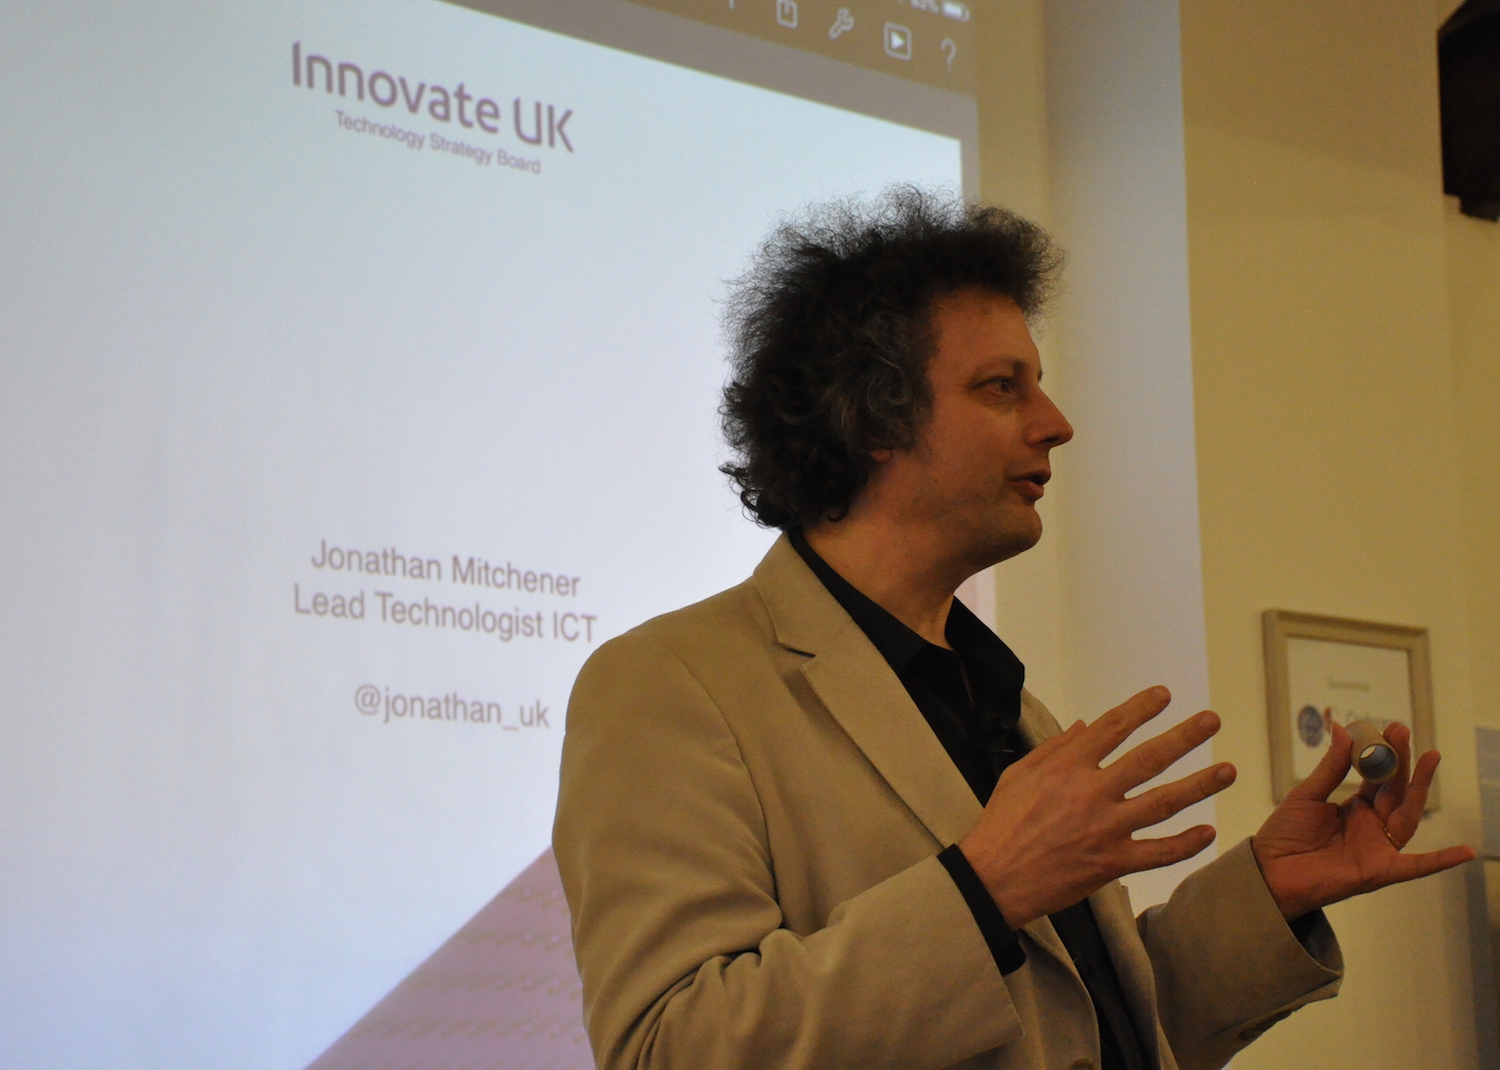 Jonathan Mitchener of Innovate UK